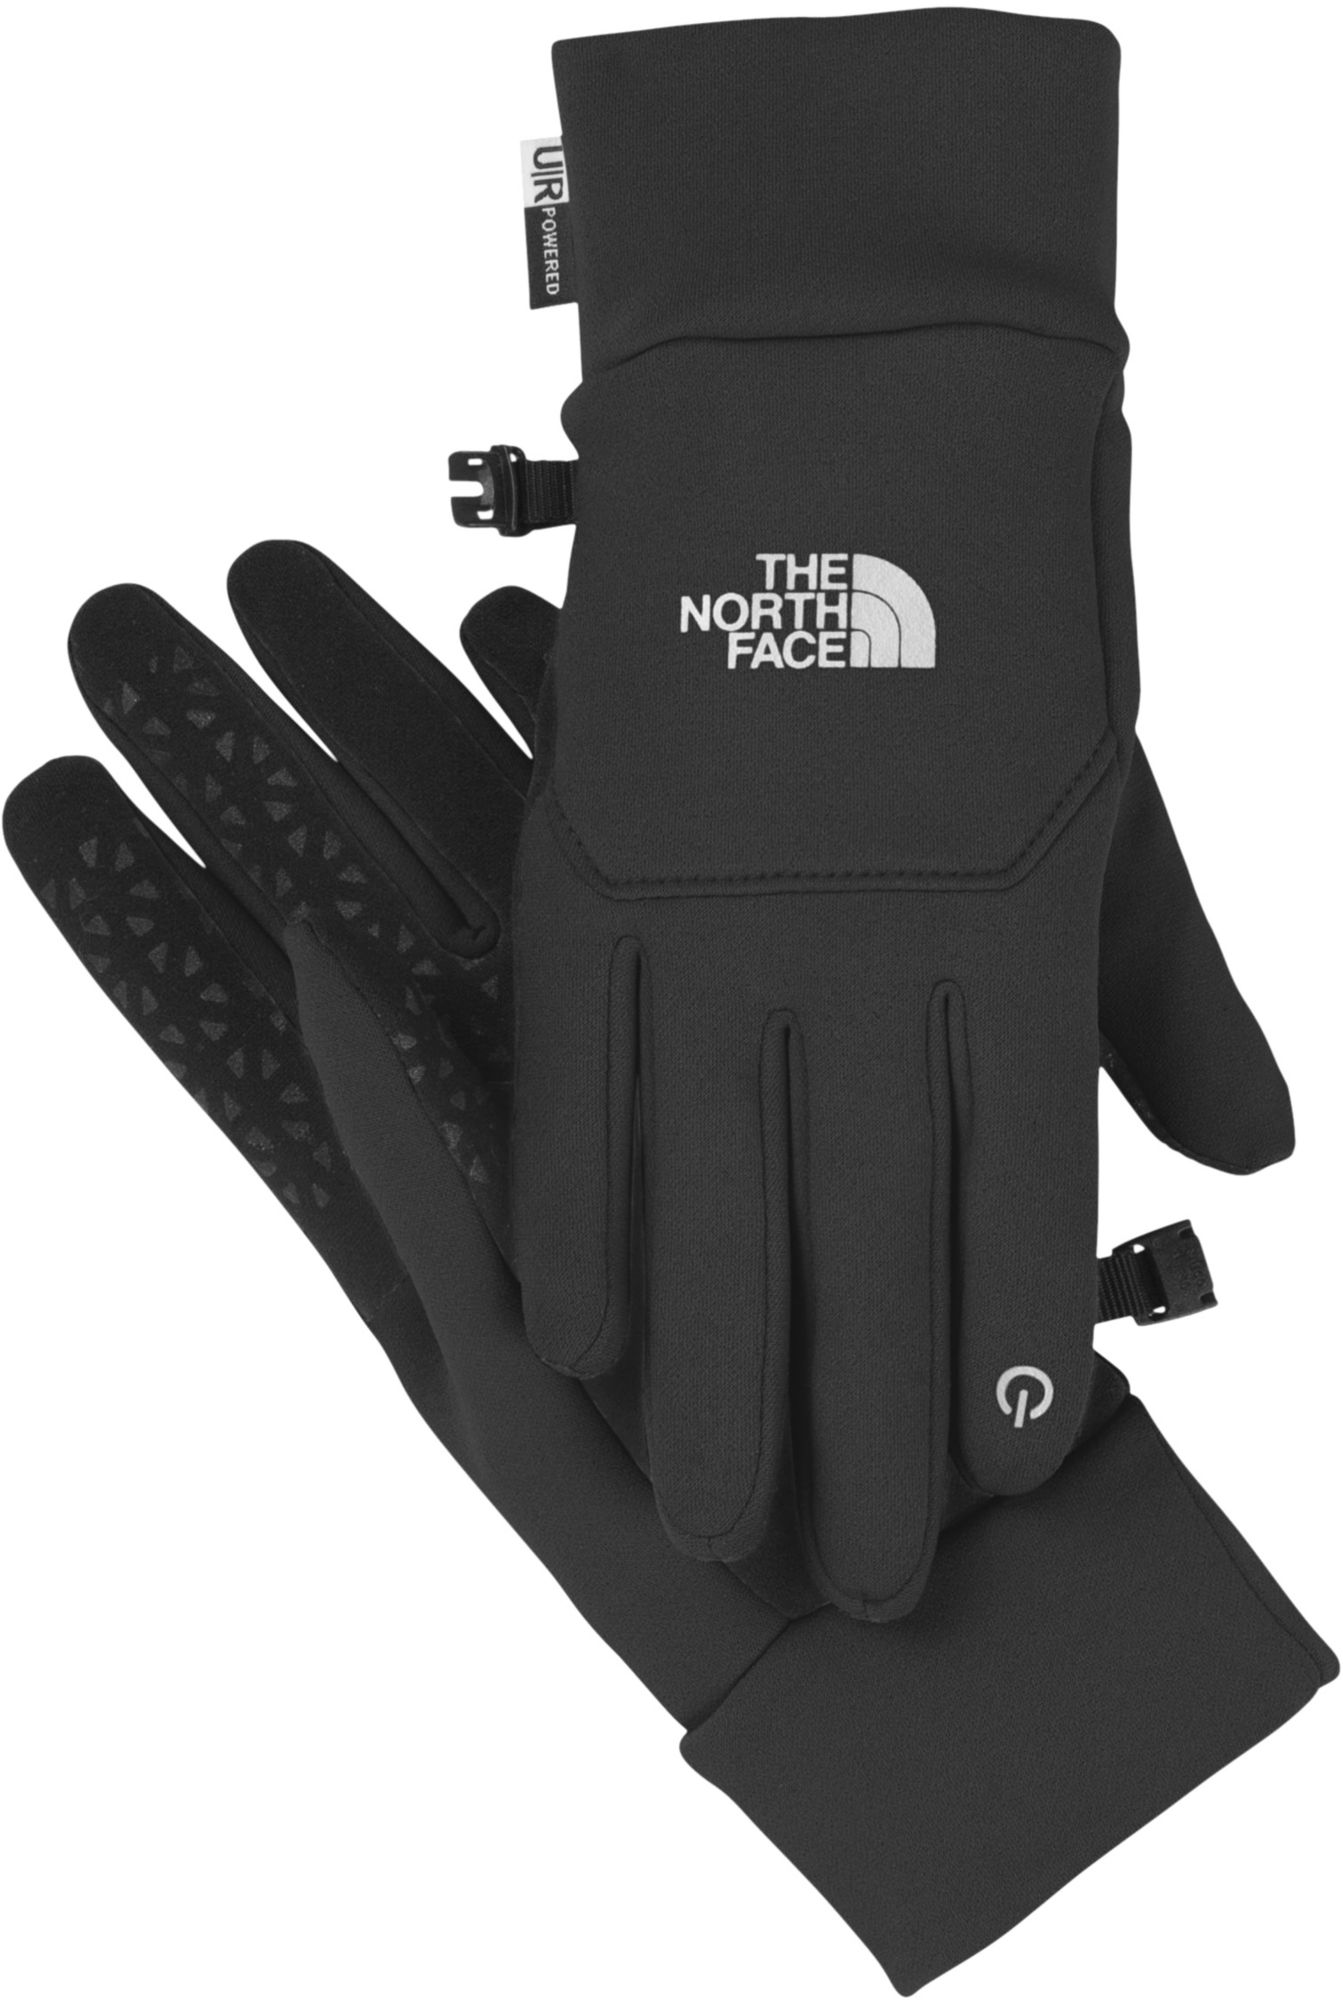 The North Face Women's Etip Gloves 